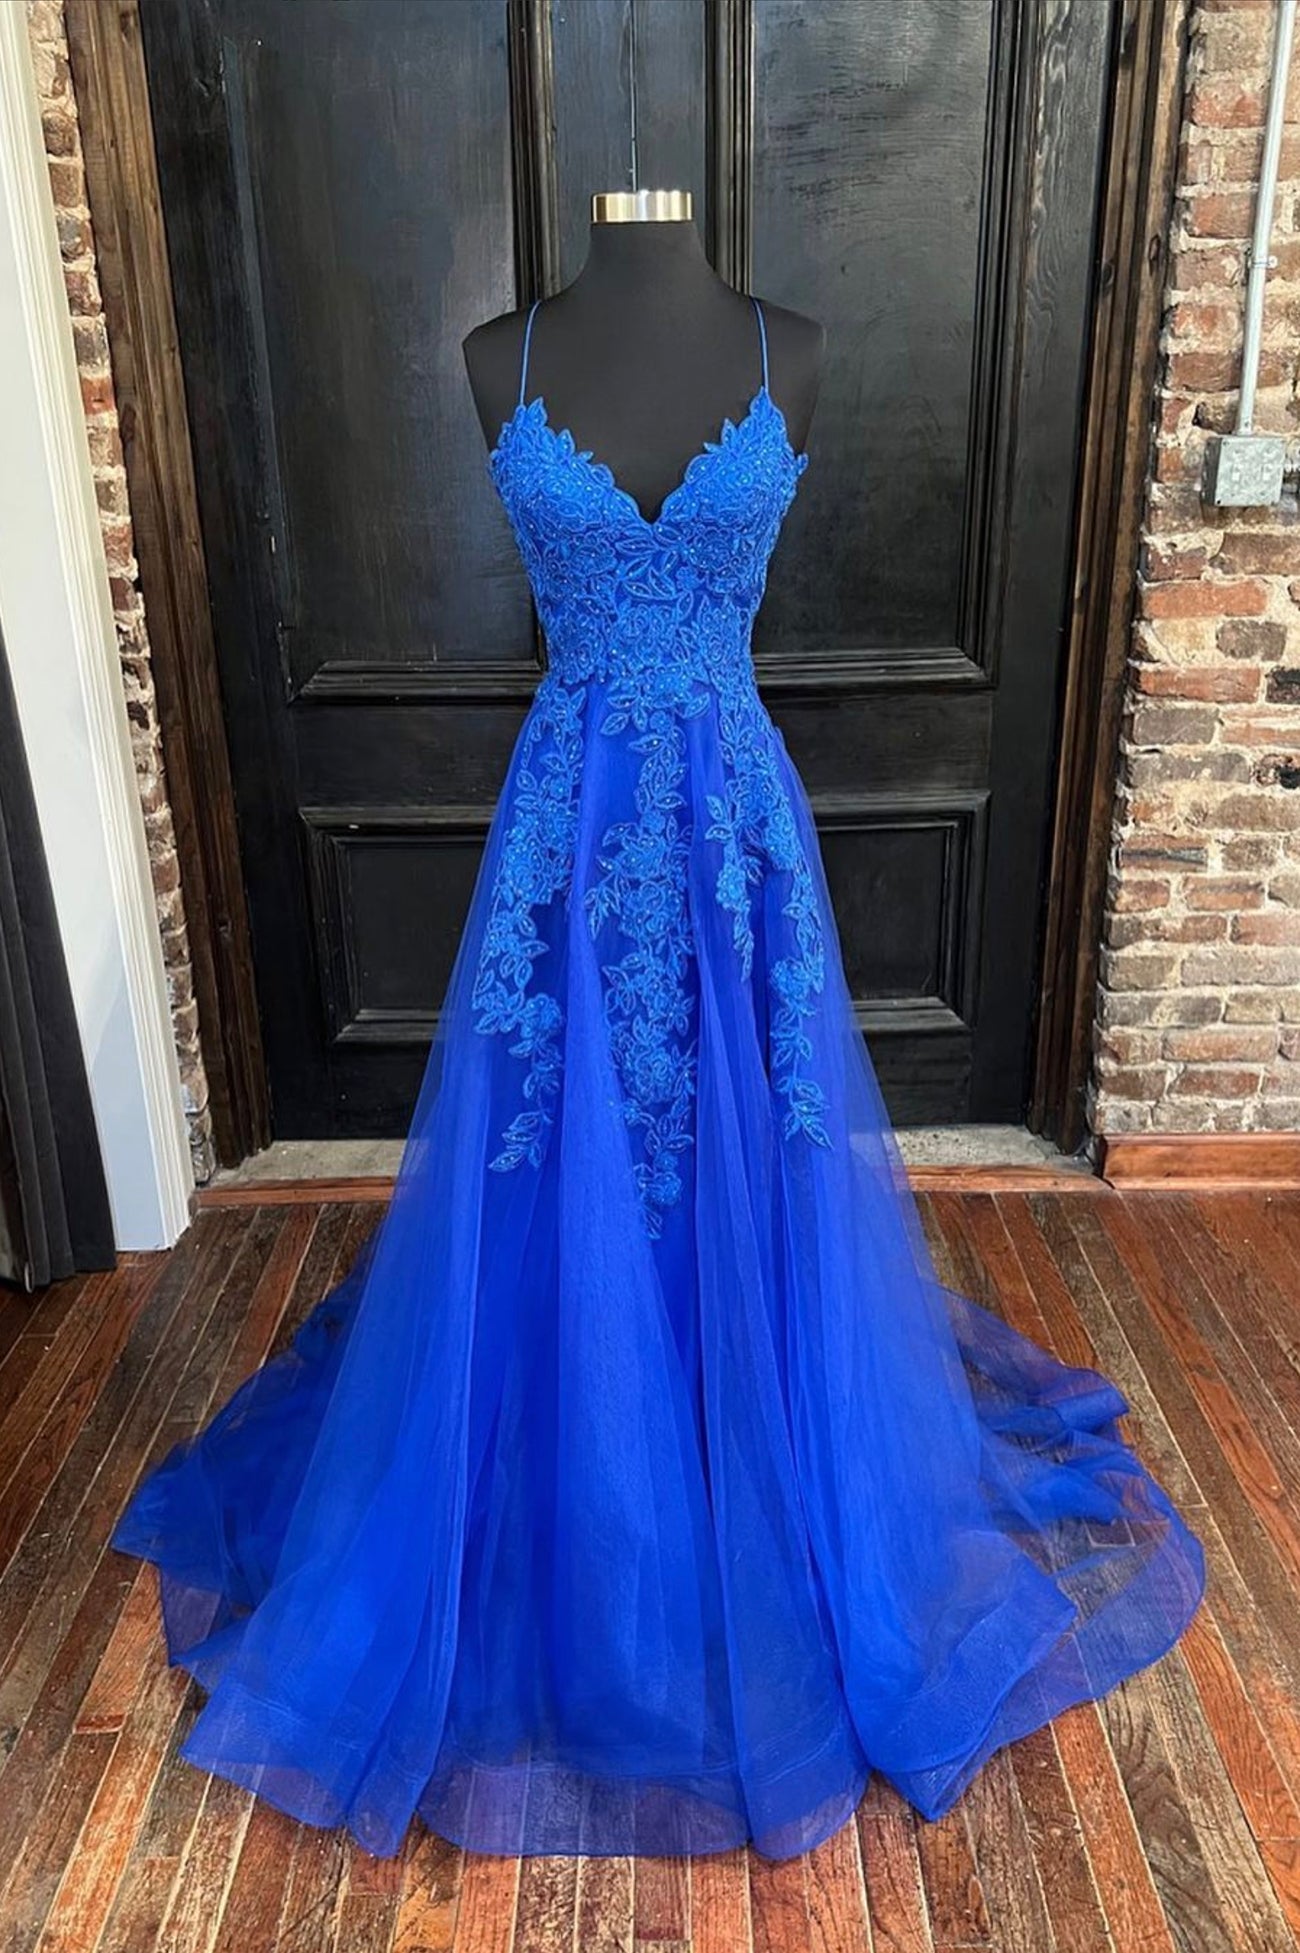 Blue Lace Long A-Line Prom Dress Outfits For Girls, Elegant V-Neck Formal Evening Dress